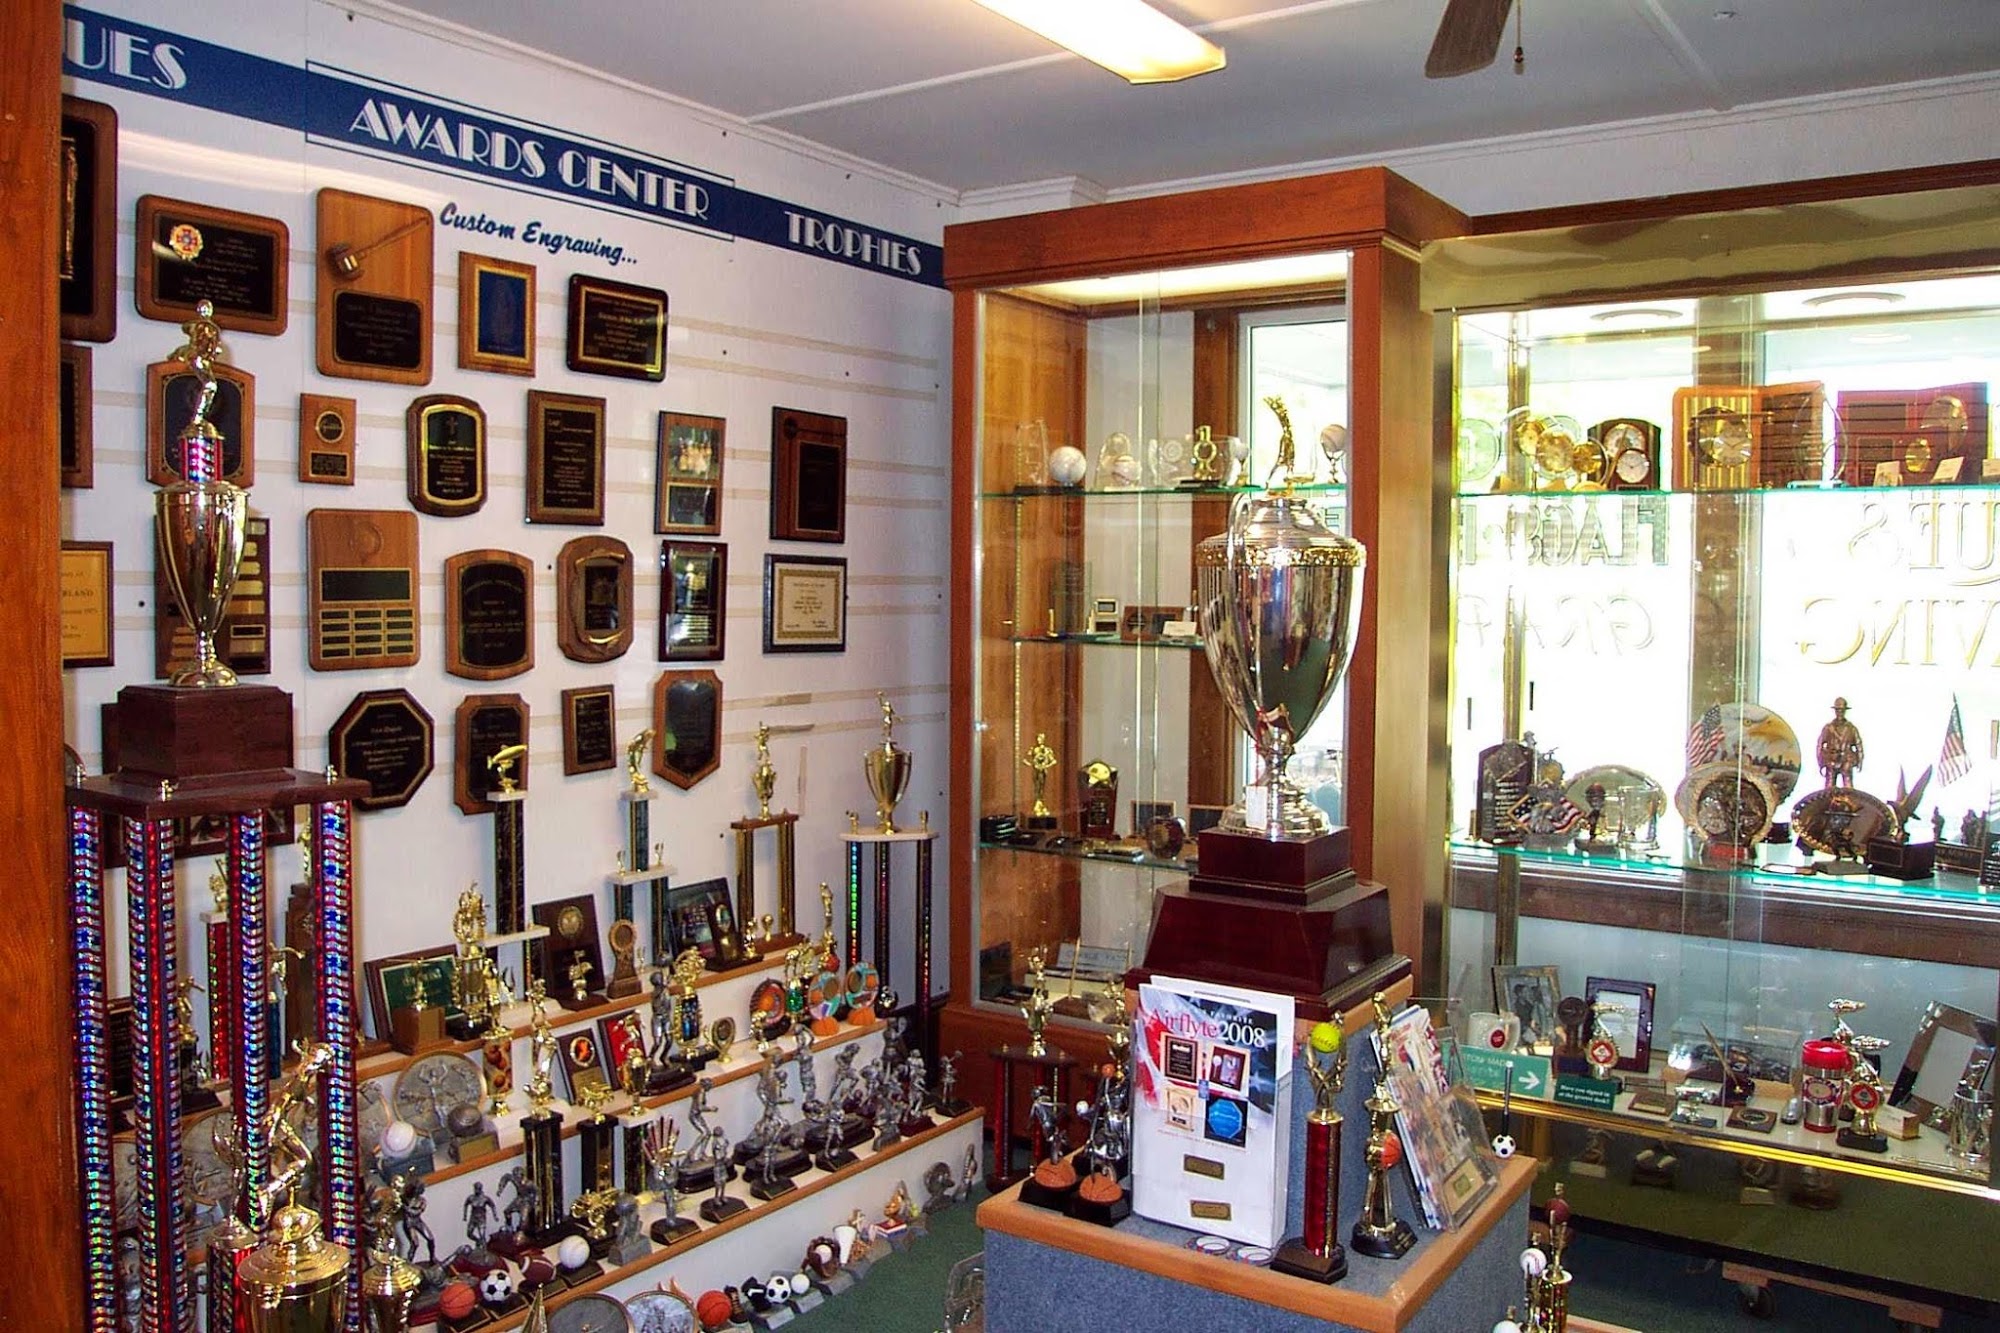 The Award Shop